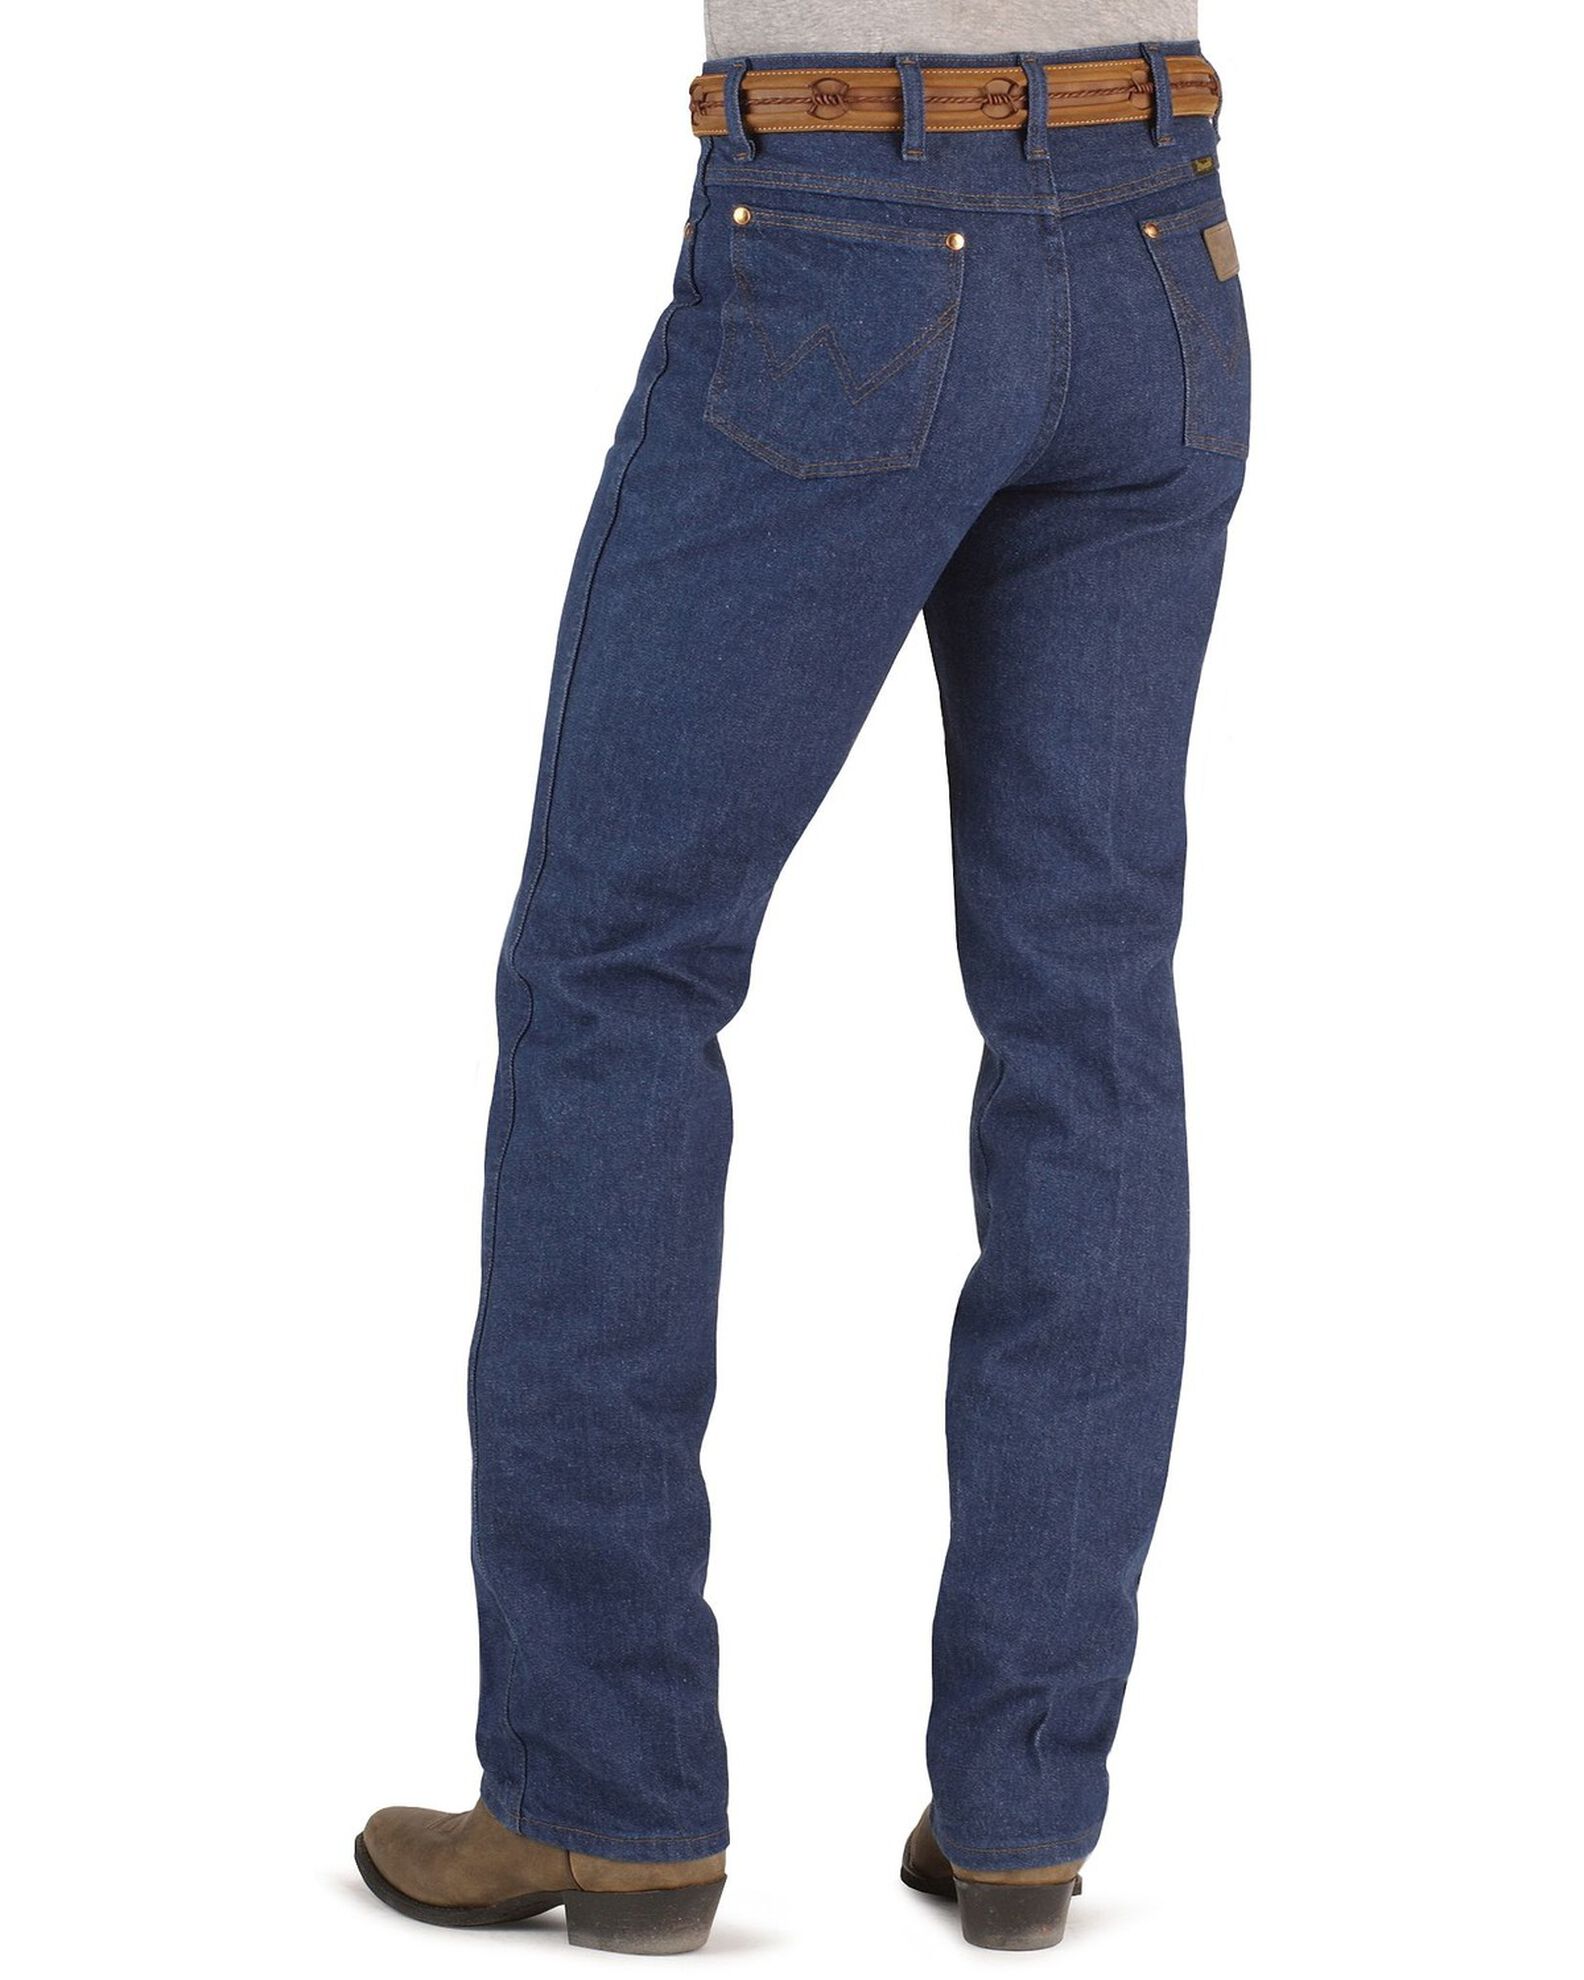 936 Jeans | Slim - Denim Fit Prewashed Wrangler - Sheplers Jeans Tall